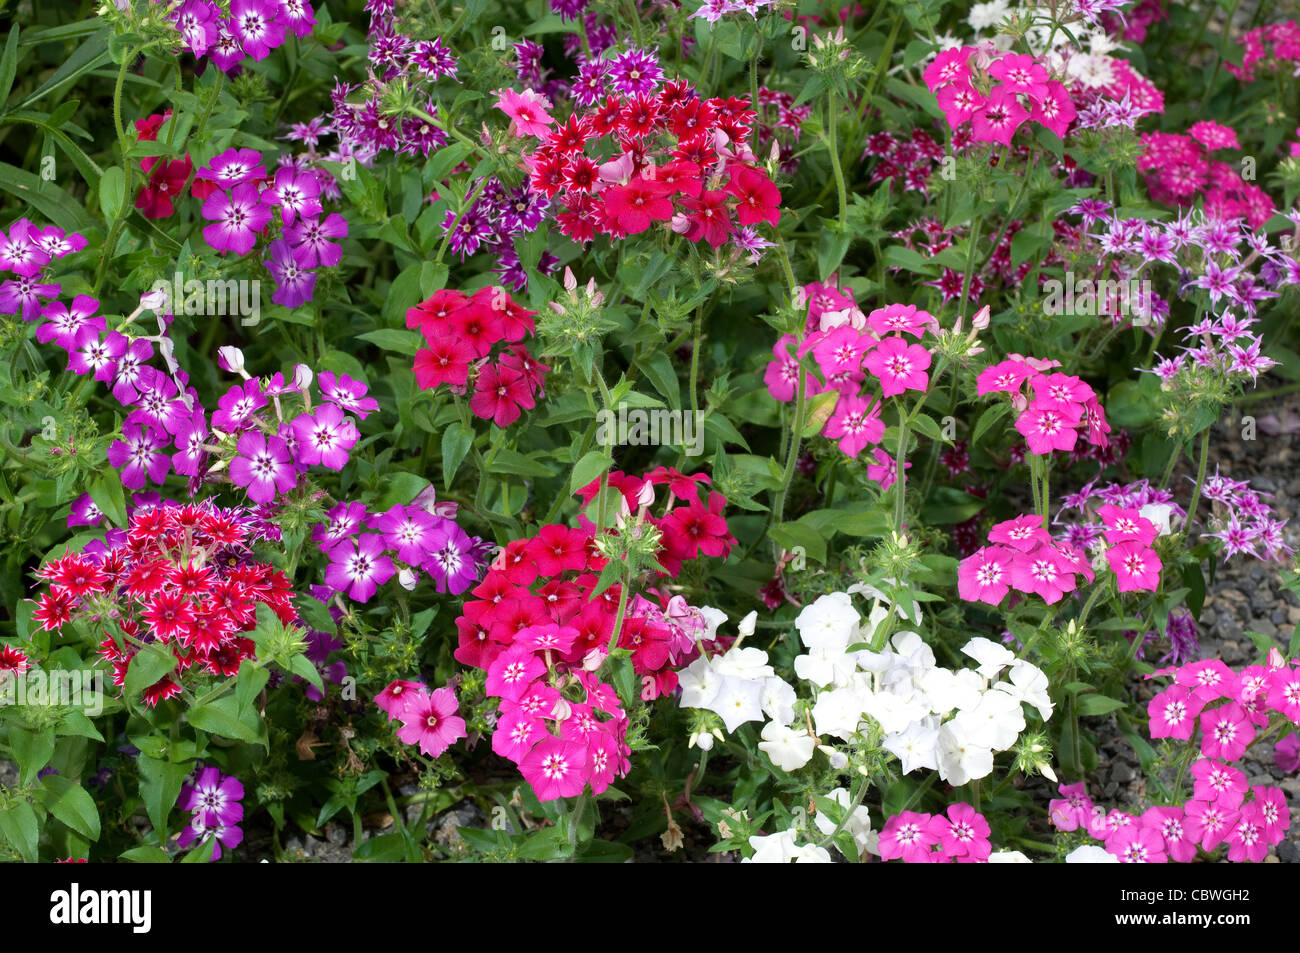 Annual Phlox (Phlox drummondii), flowering. Stock Photo